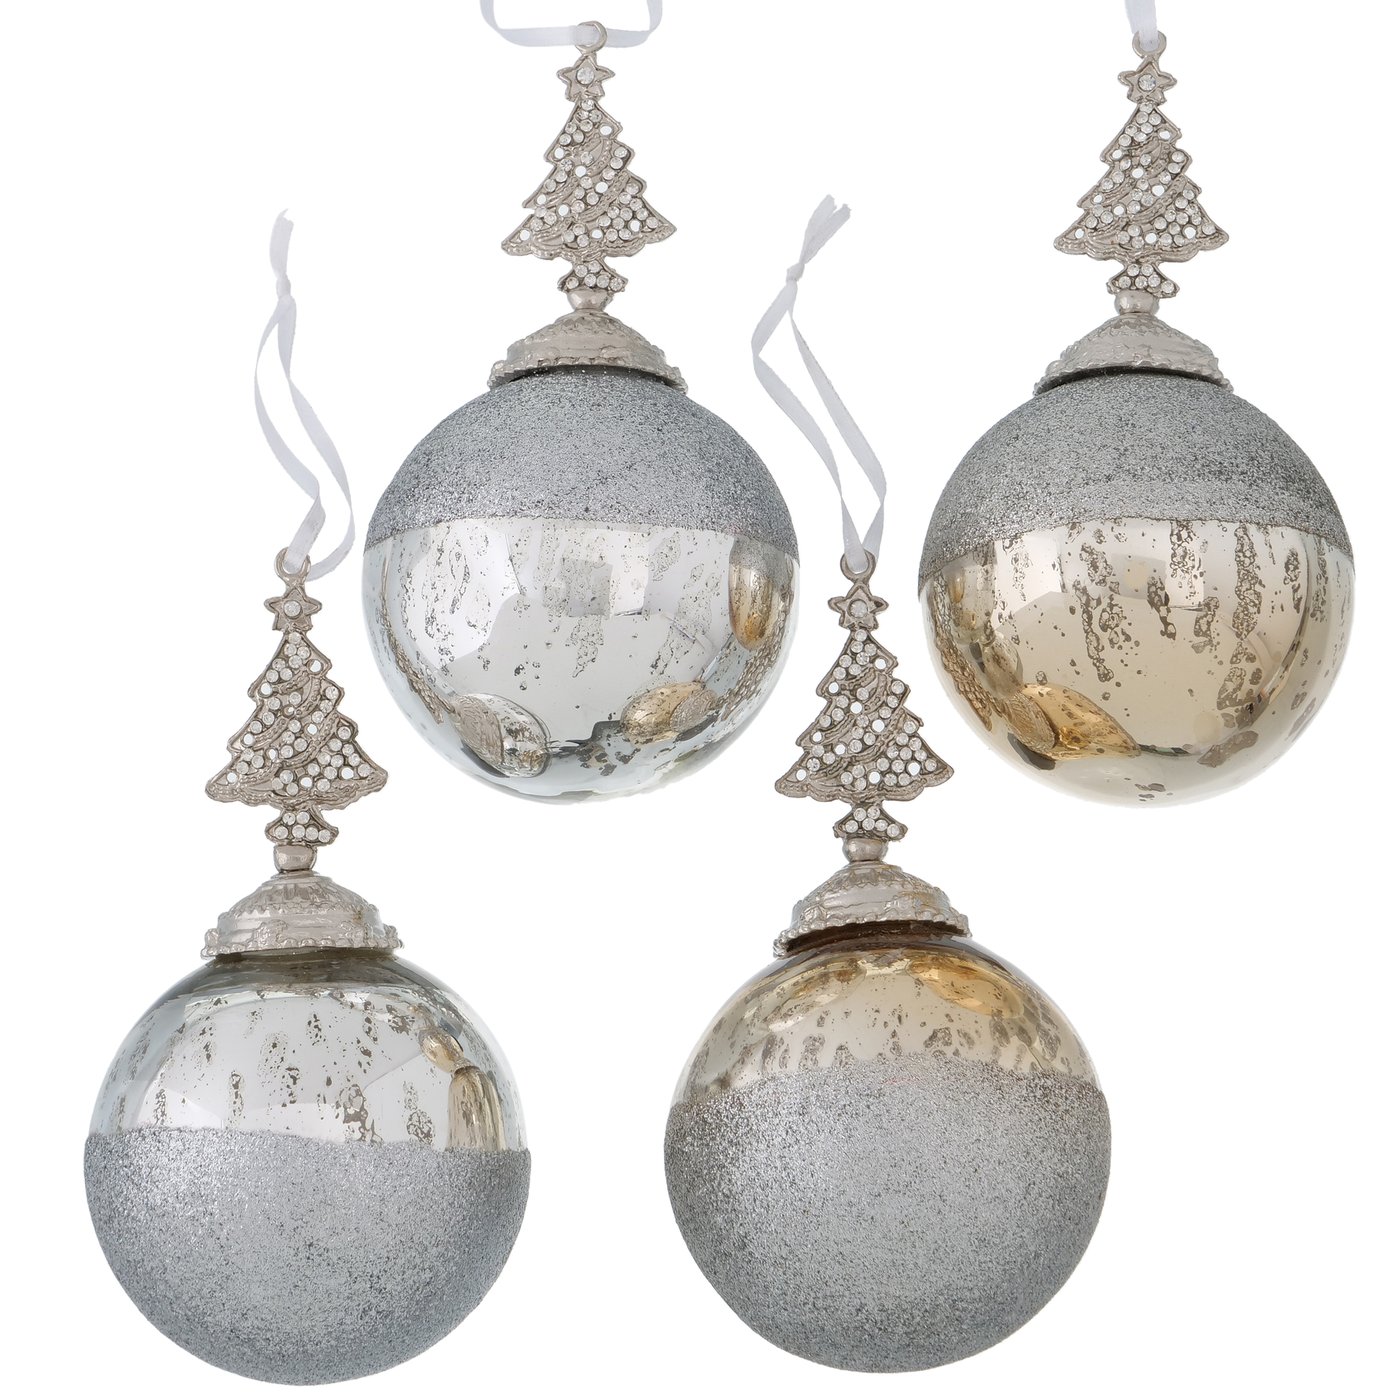 Edle Weihnachtskugel mit Baum Topper  grau silber gold 4er Set - D 8cm, 2013499, 4020607910805, Christbaumkugel, Weihnachtsbaumkugel